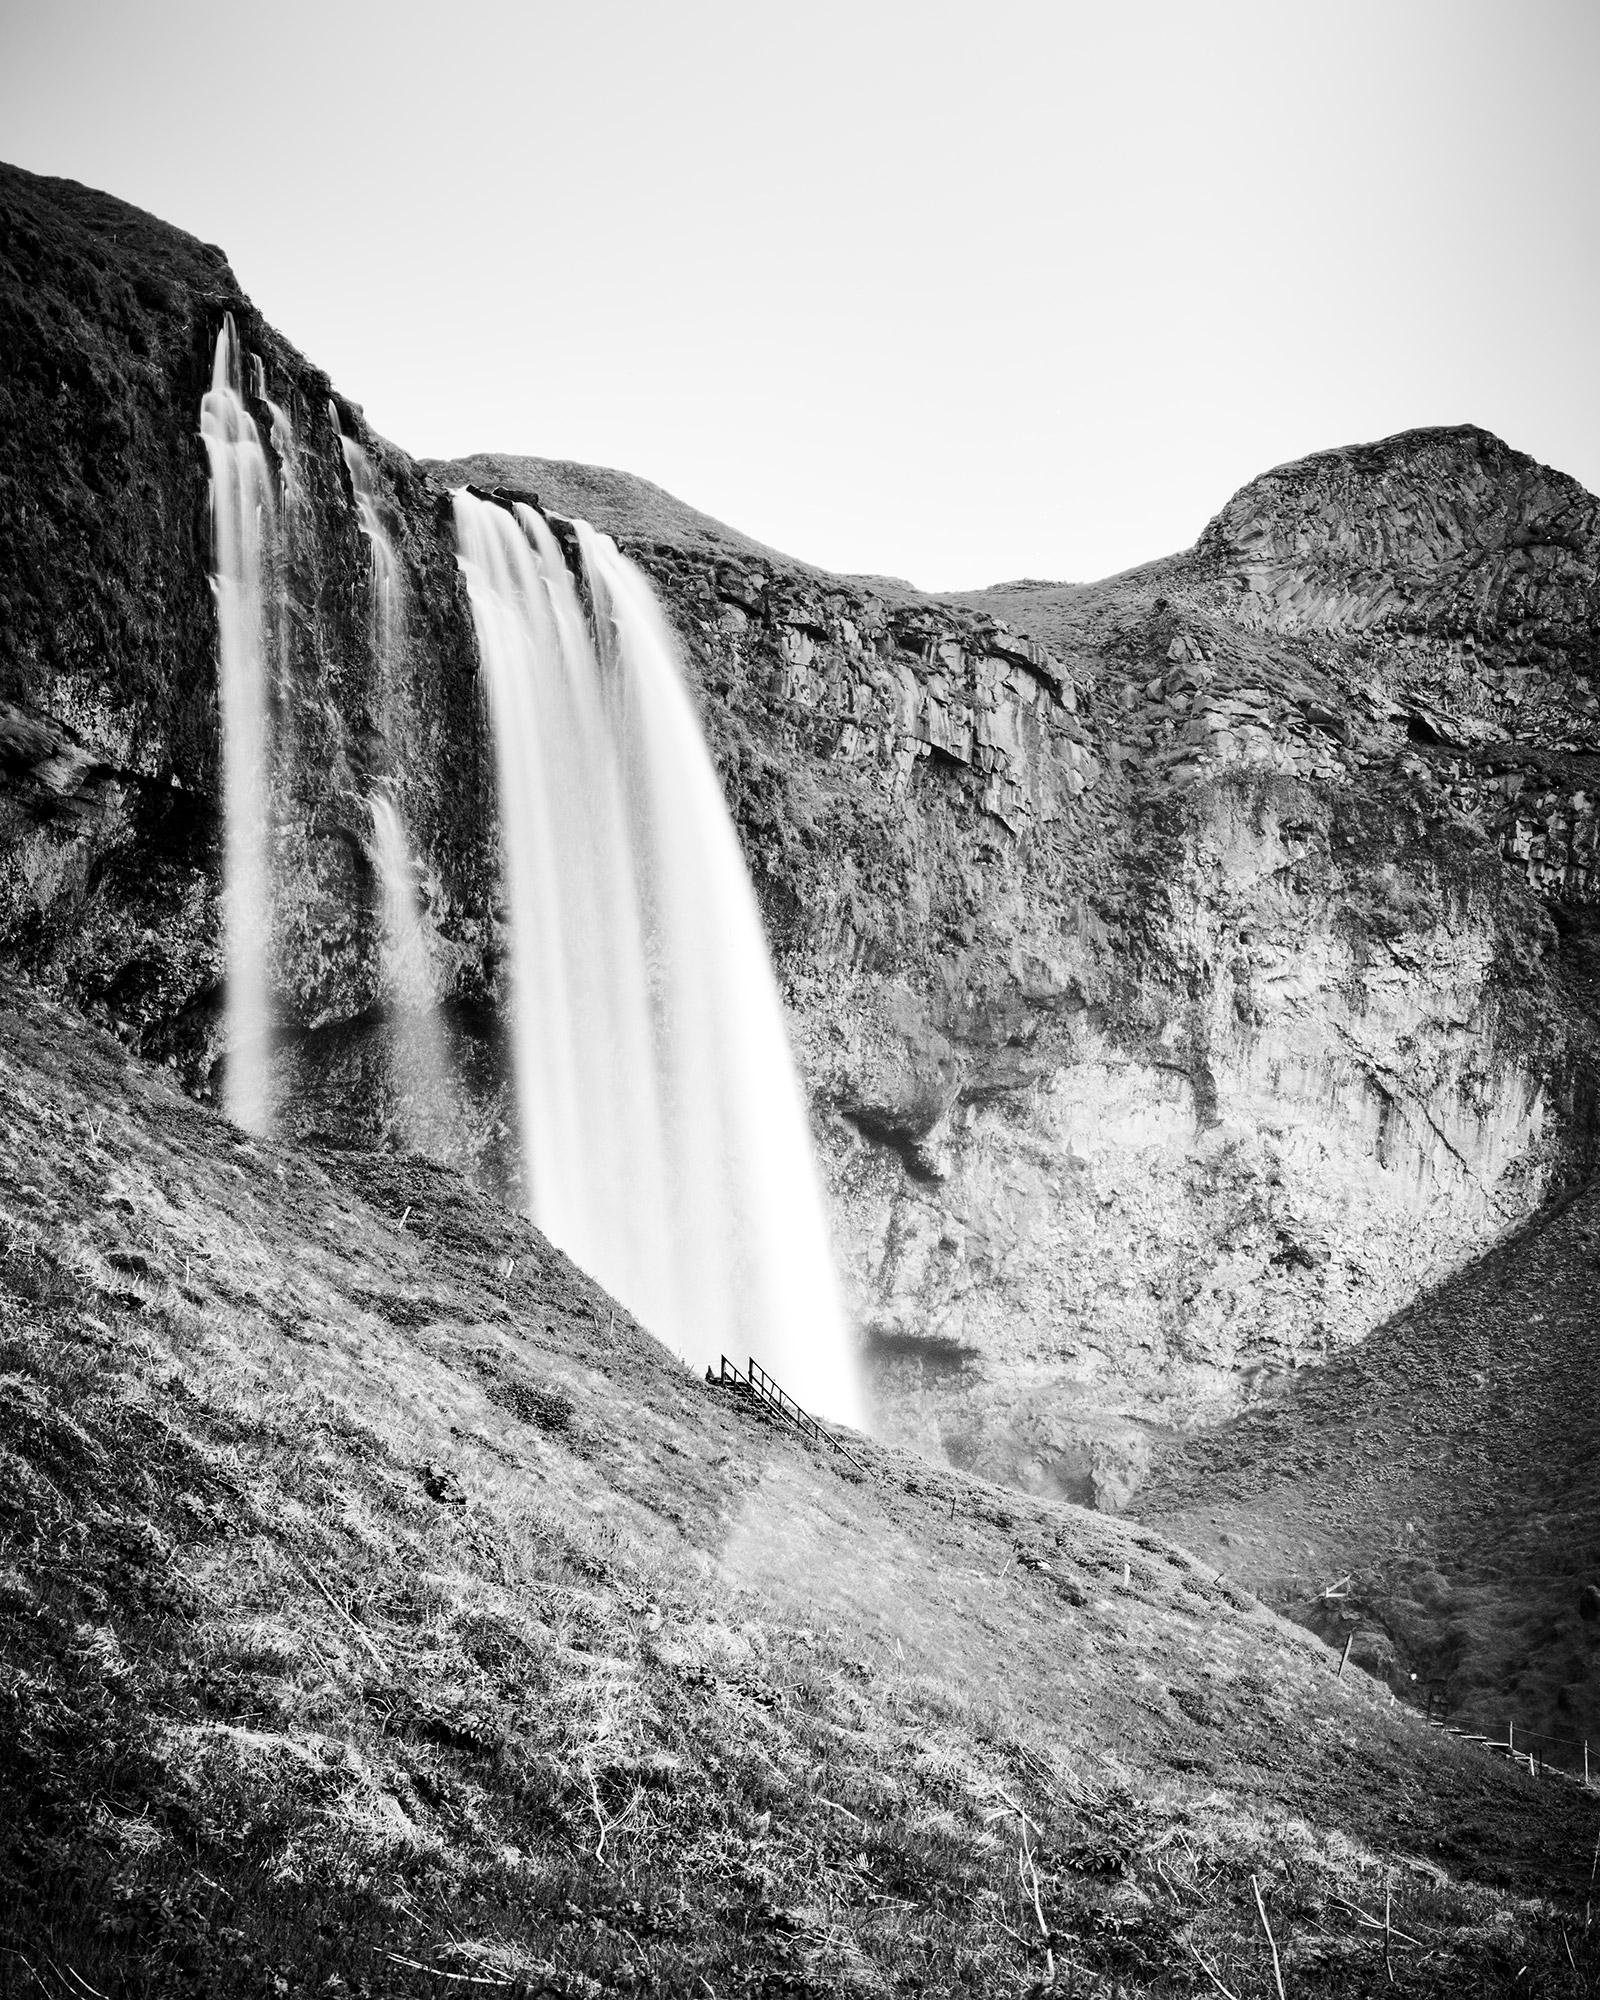 Seljalandsfoss, Waterfall, Iceland, black & white waterscape fineart photography